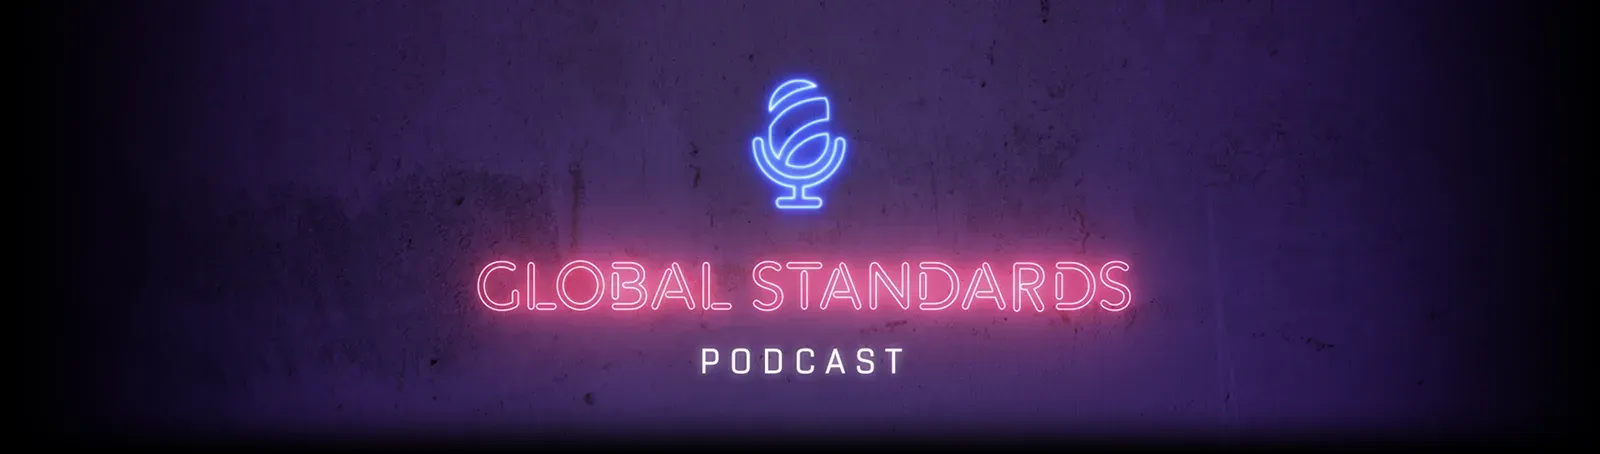 podcast global standards